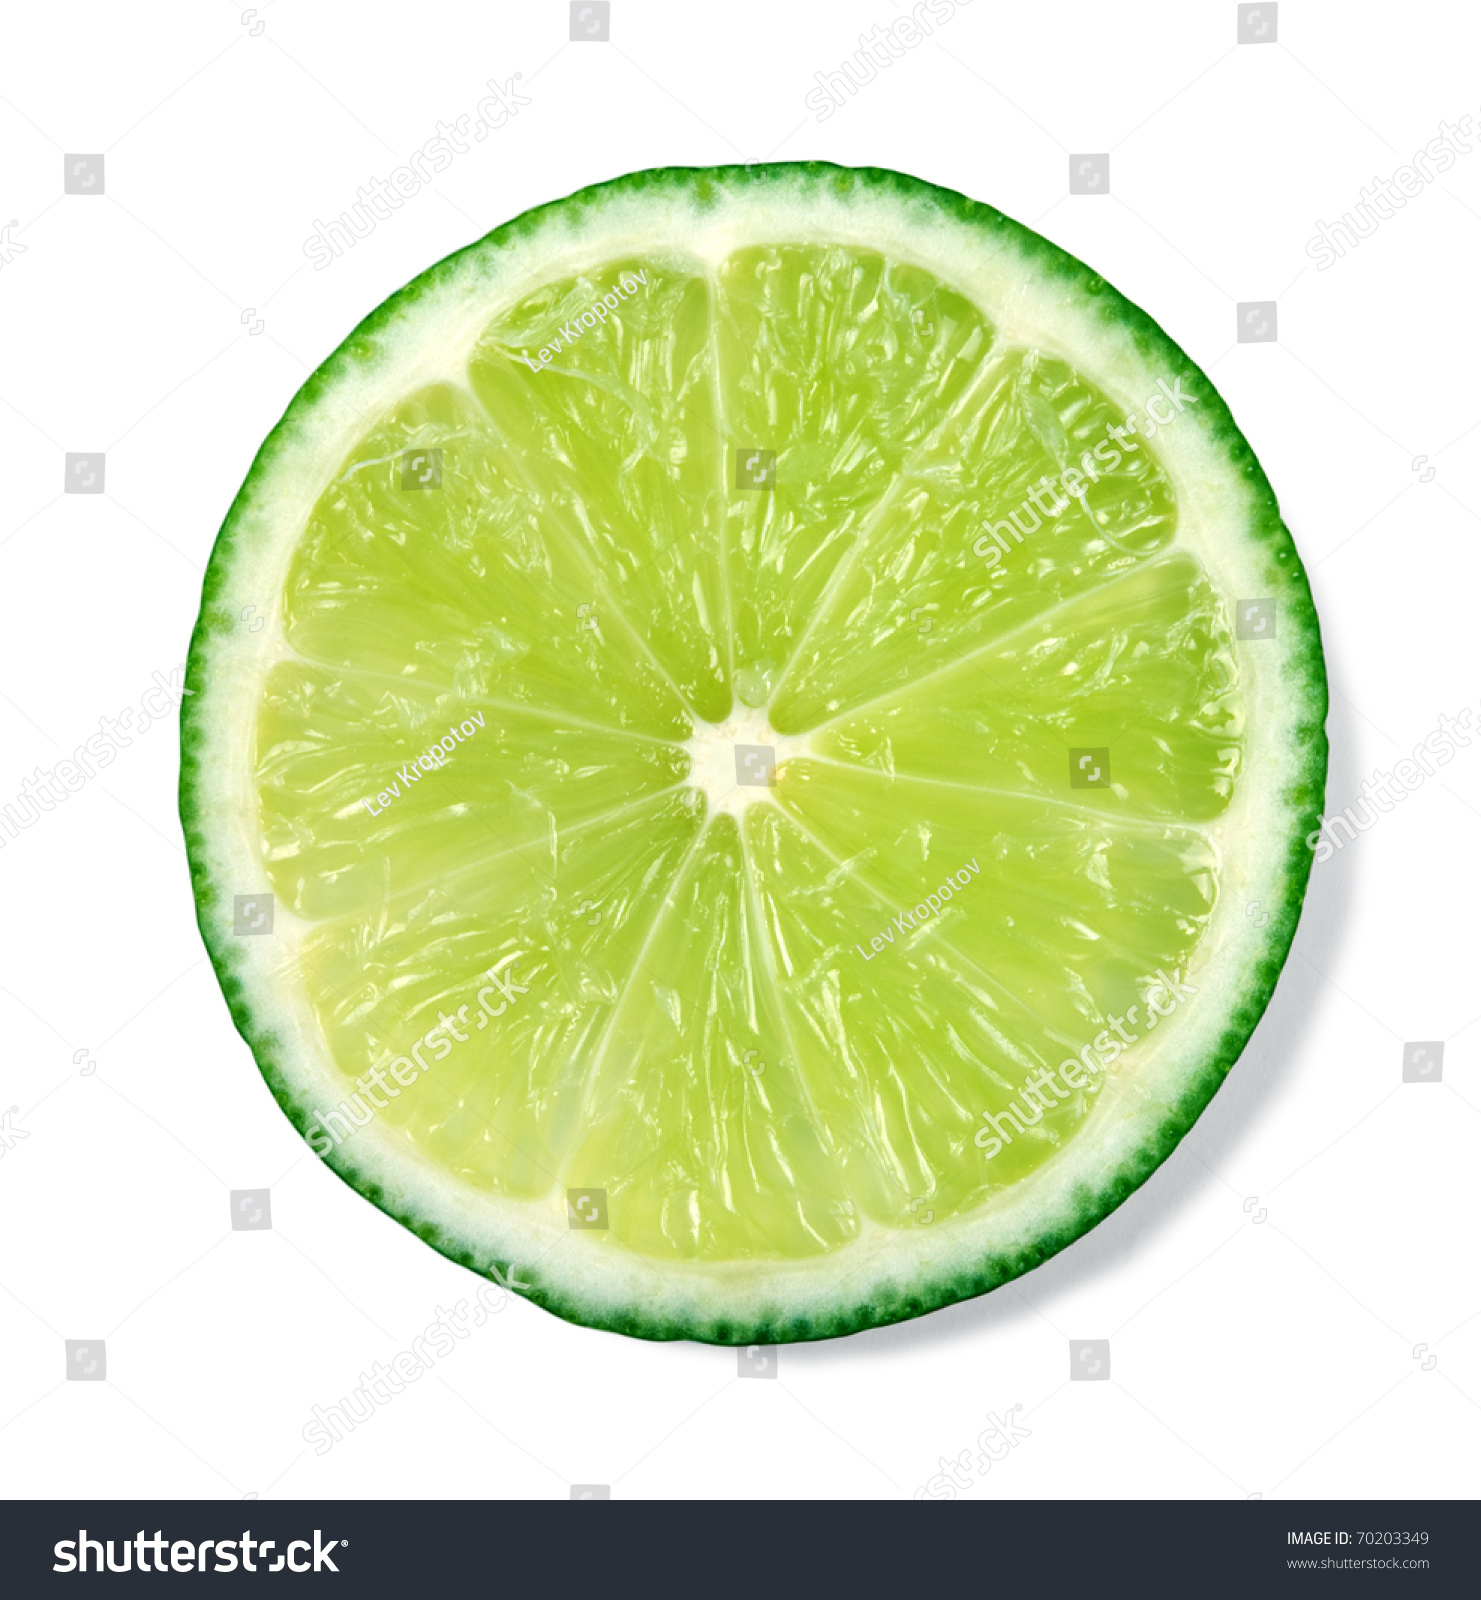 Slice of fresh lime isolated on white background #70203349